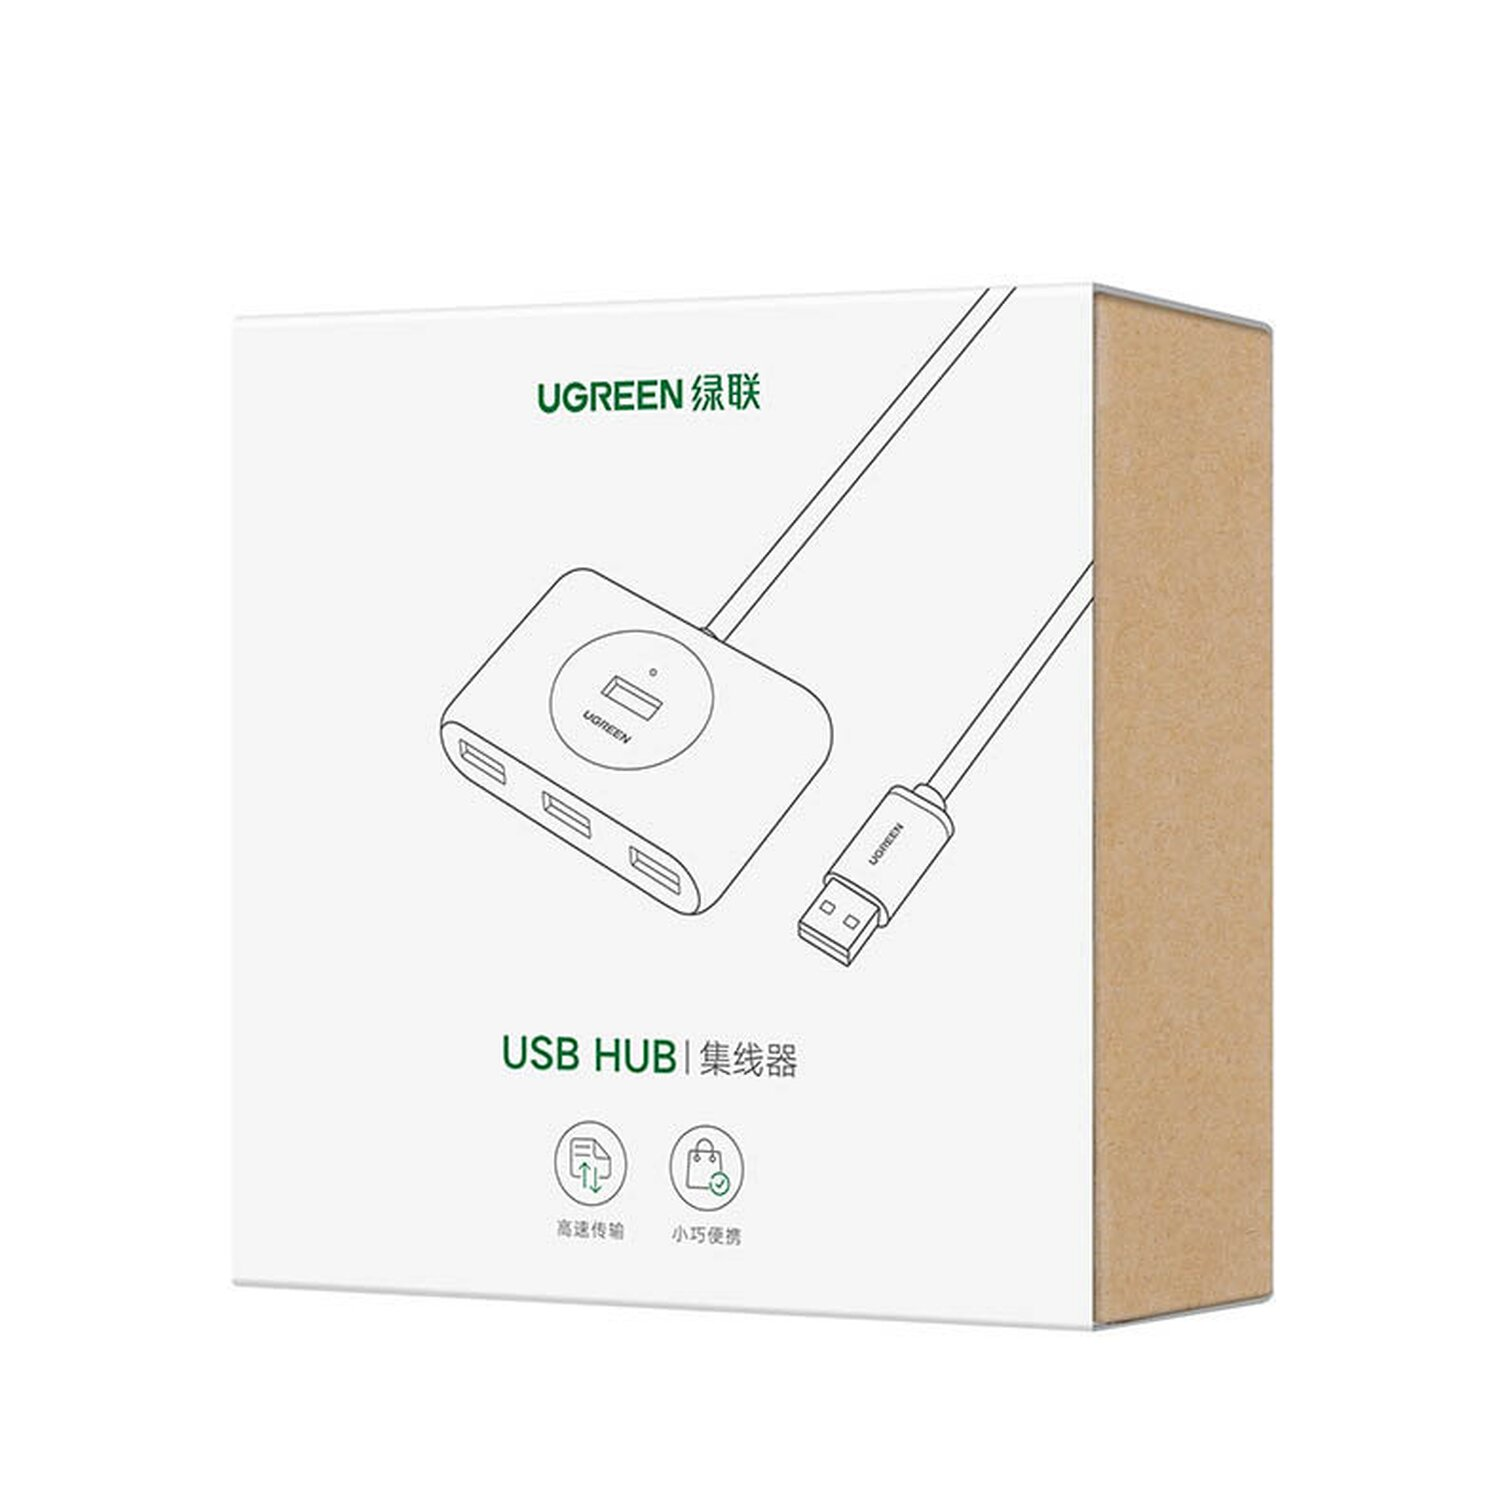 Hub UGREEN HUB 3.0 USB USB